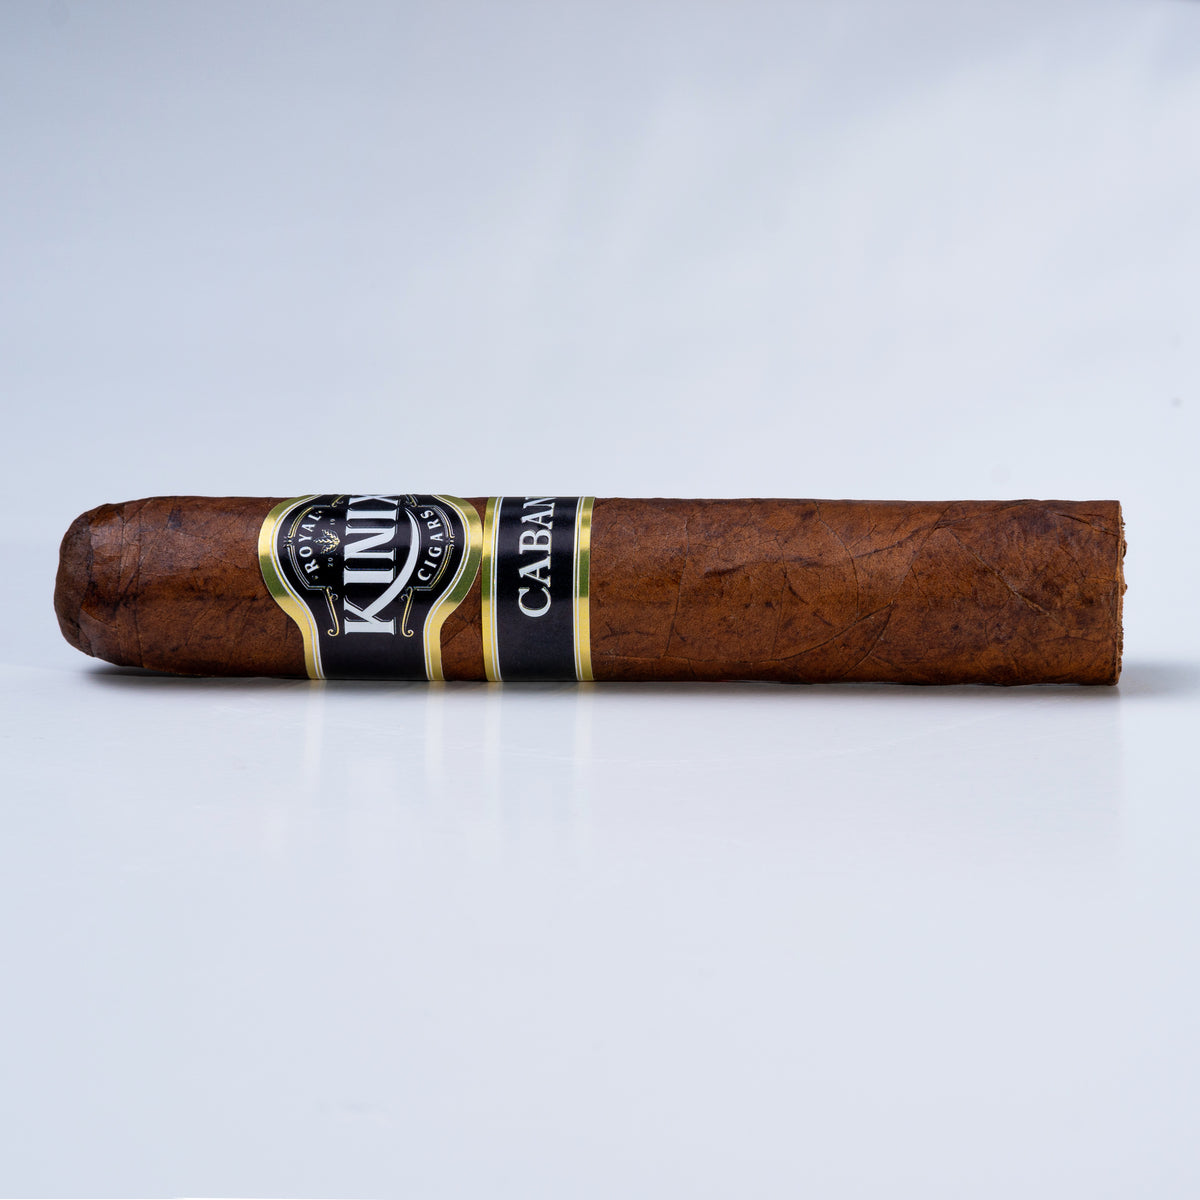 CABAN (8er Kiste) – P. Santos Cigars UG